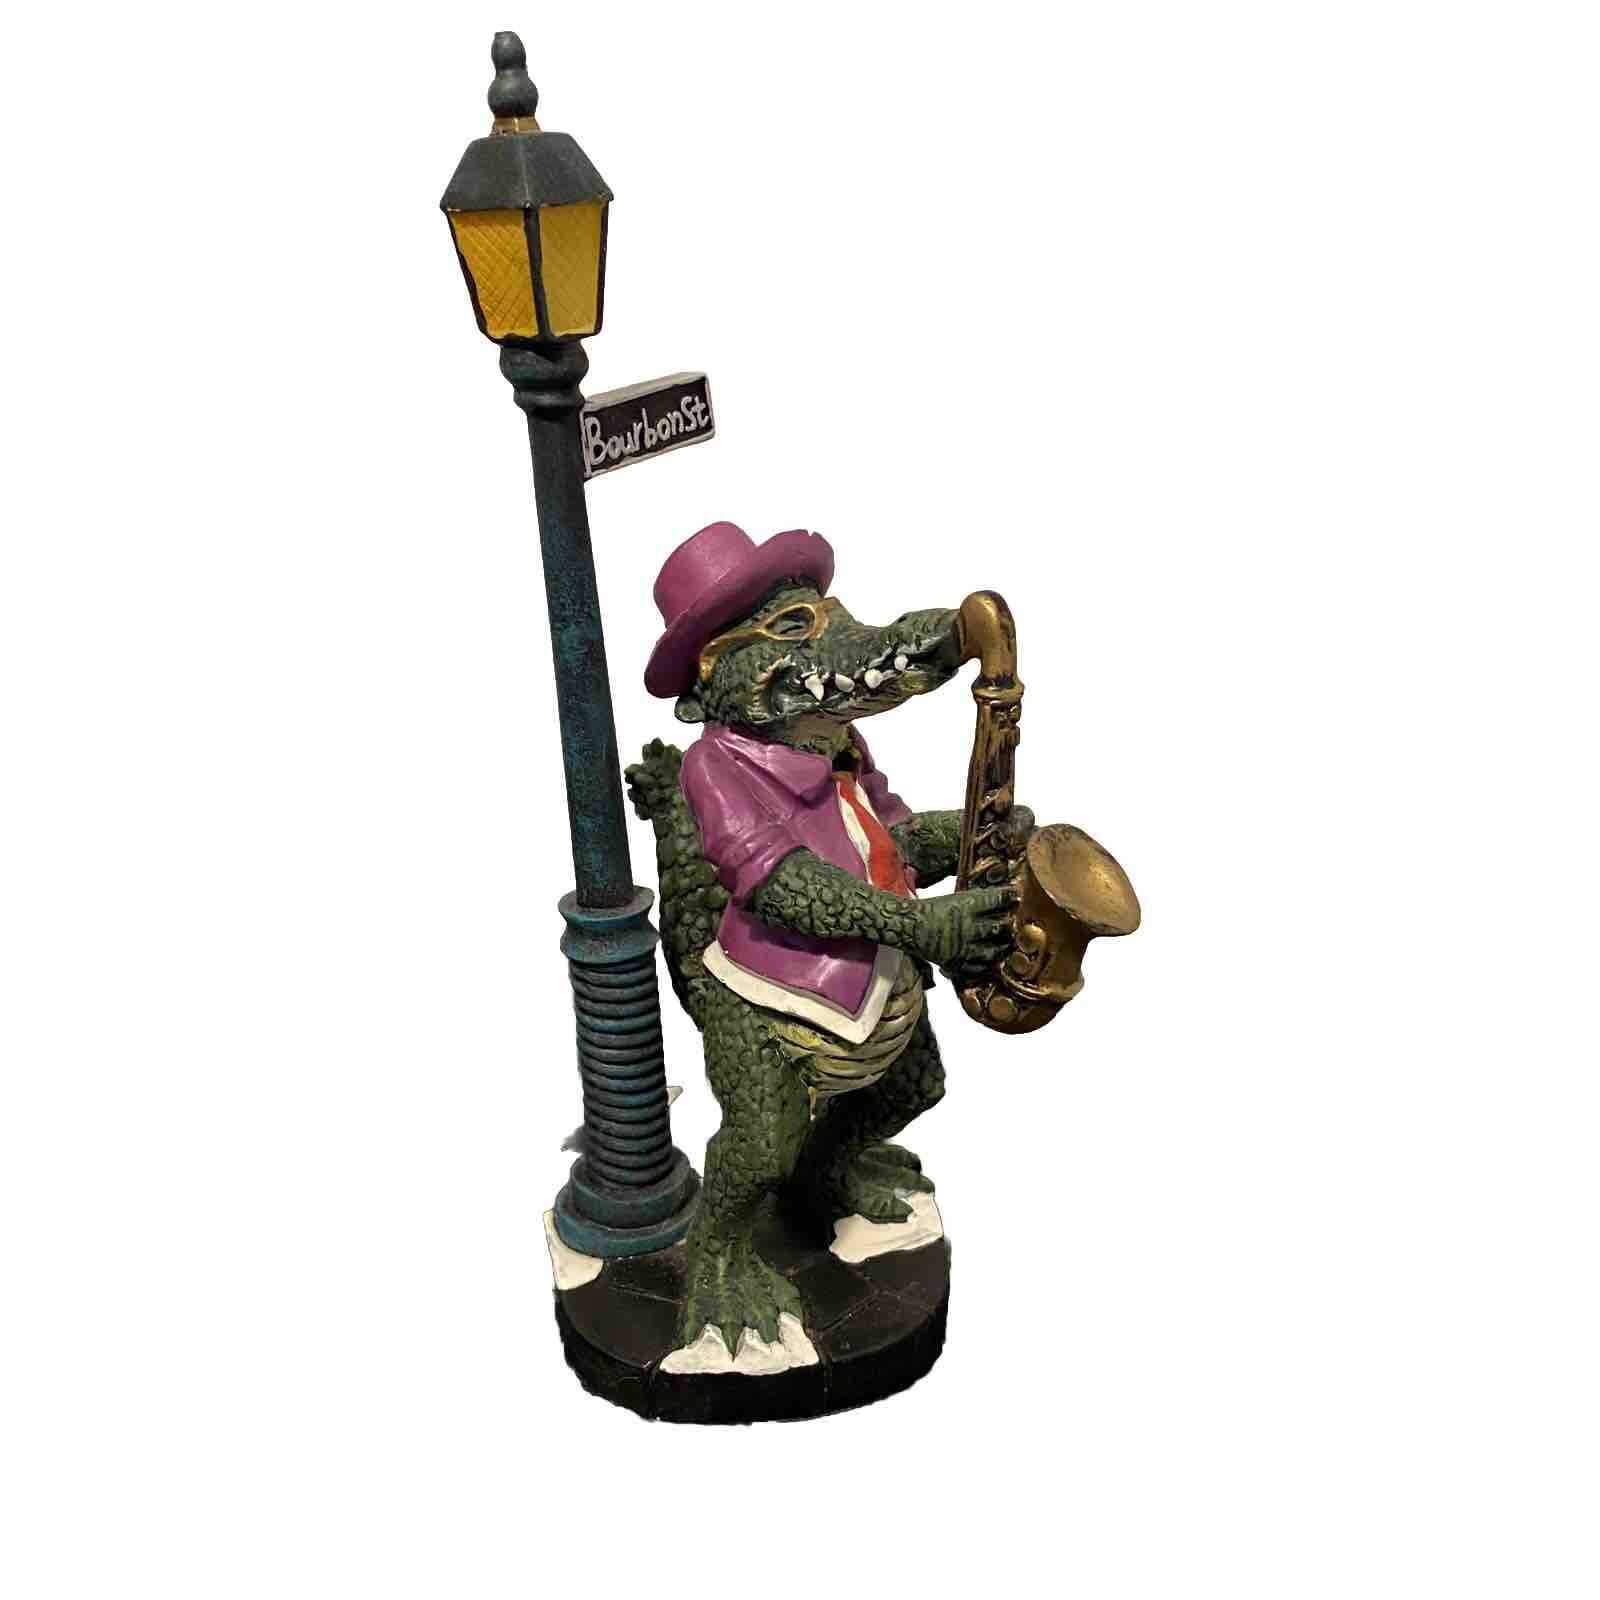 New Orleans, Bourbon St. Jazz Sax Musician Figurine. Lamp Post Resin 7”